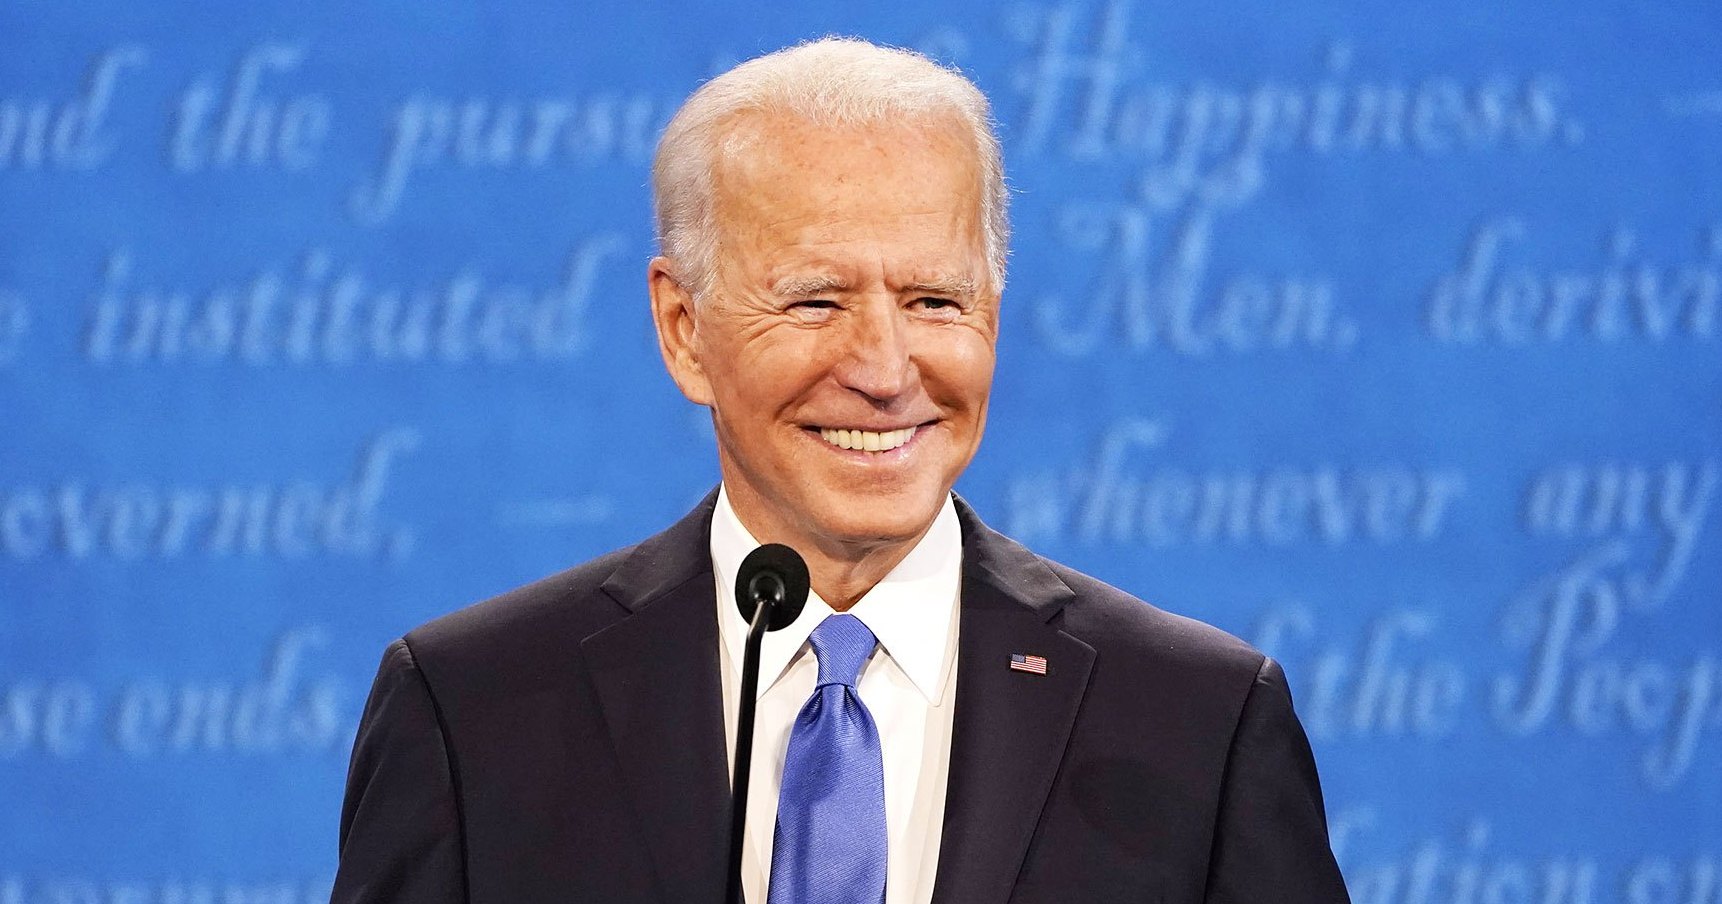 Joe Biden Wins Presidential Election 2020 Over Donald Trump: Celebs React to result